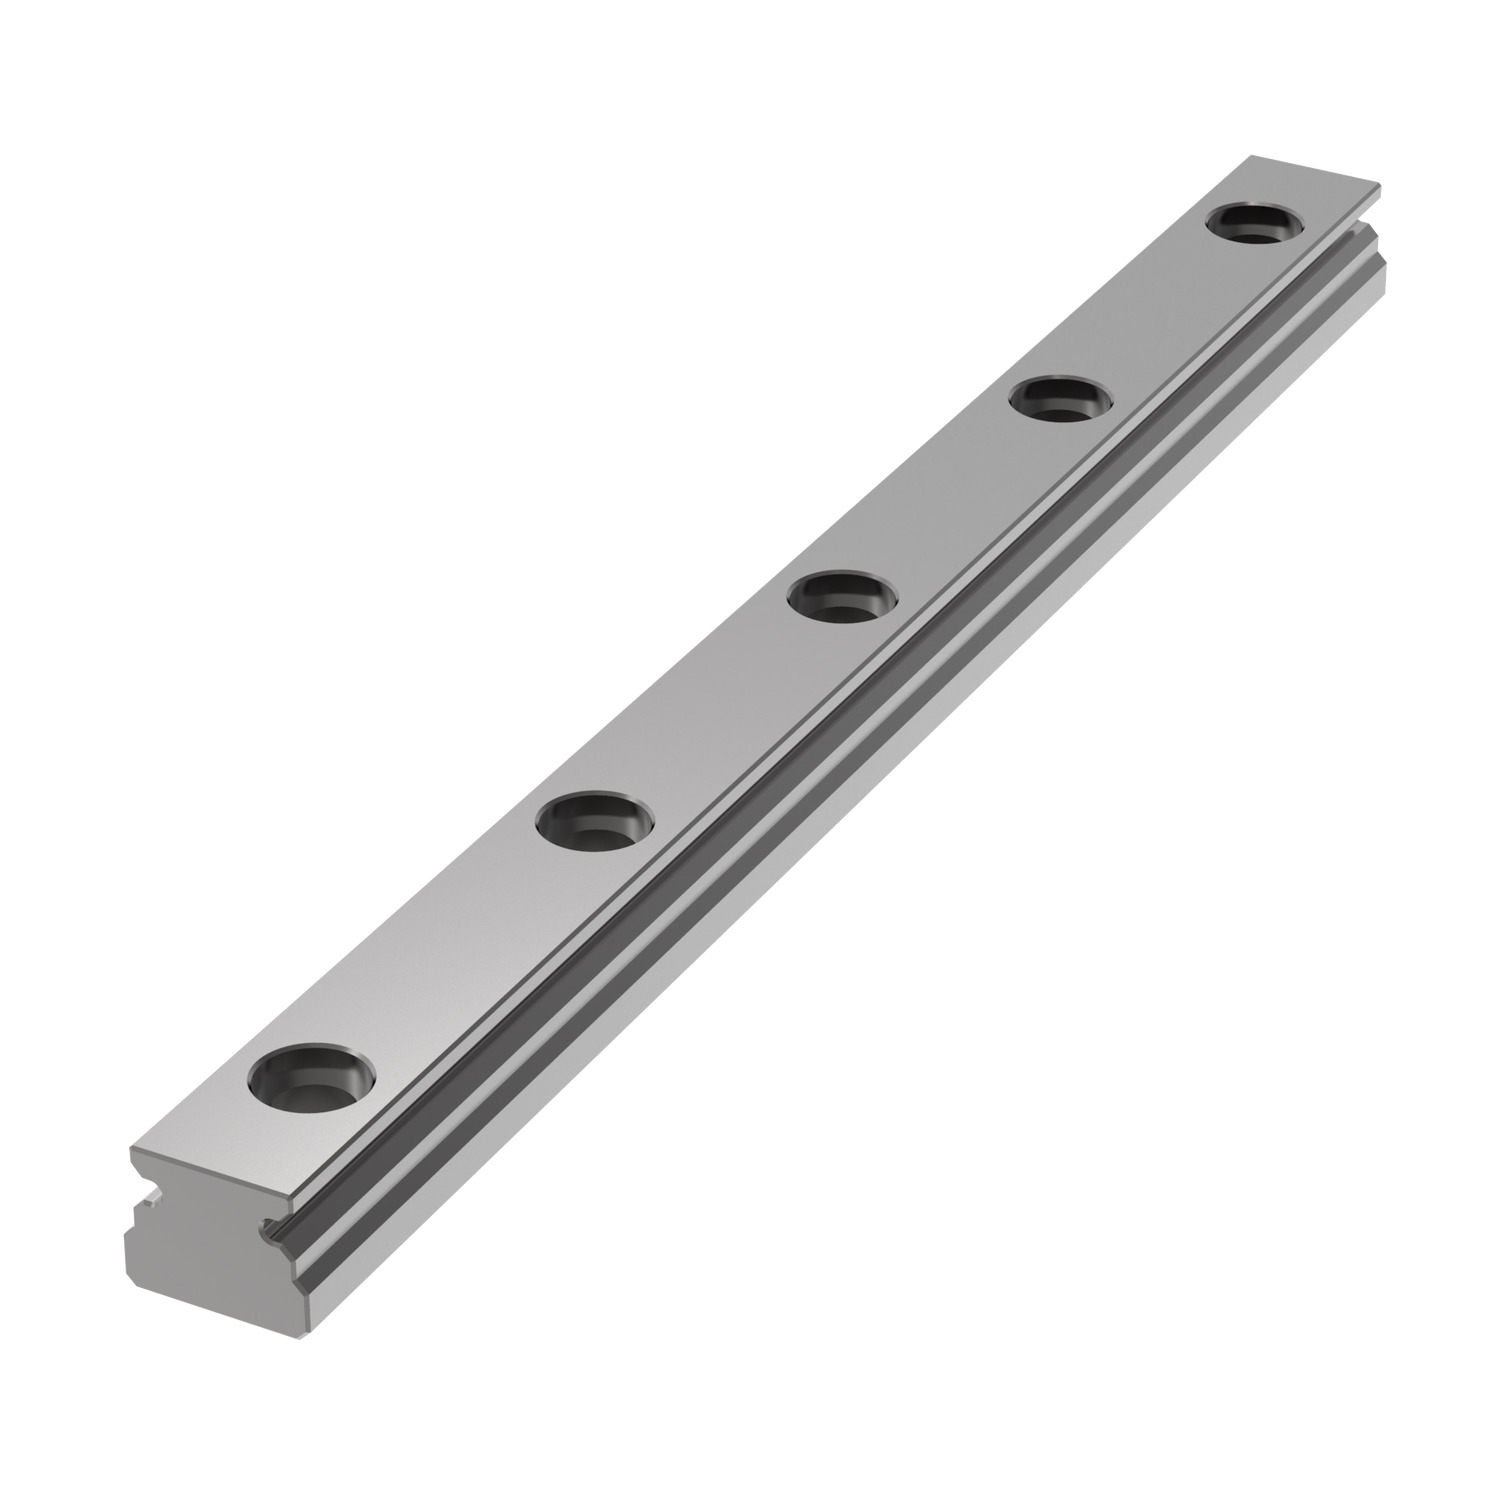 3mm Miniature Linear Rail Miniature linear guideways - stainless steel. Lengths to 1 metre.